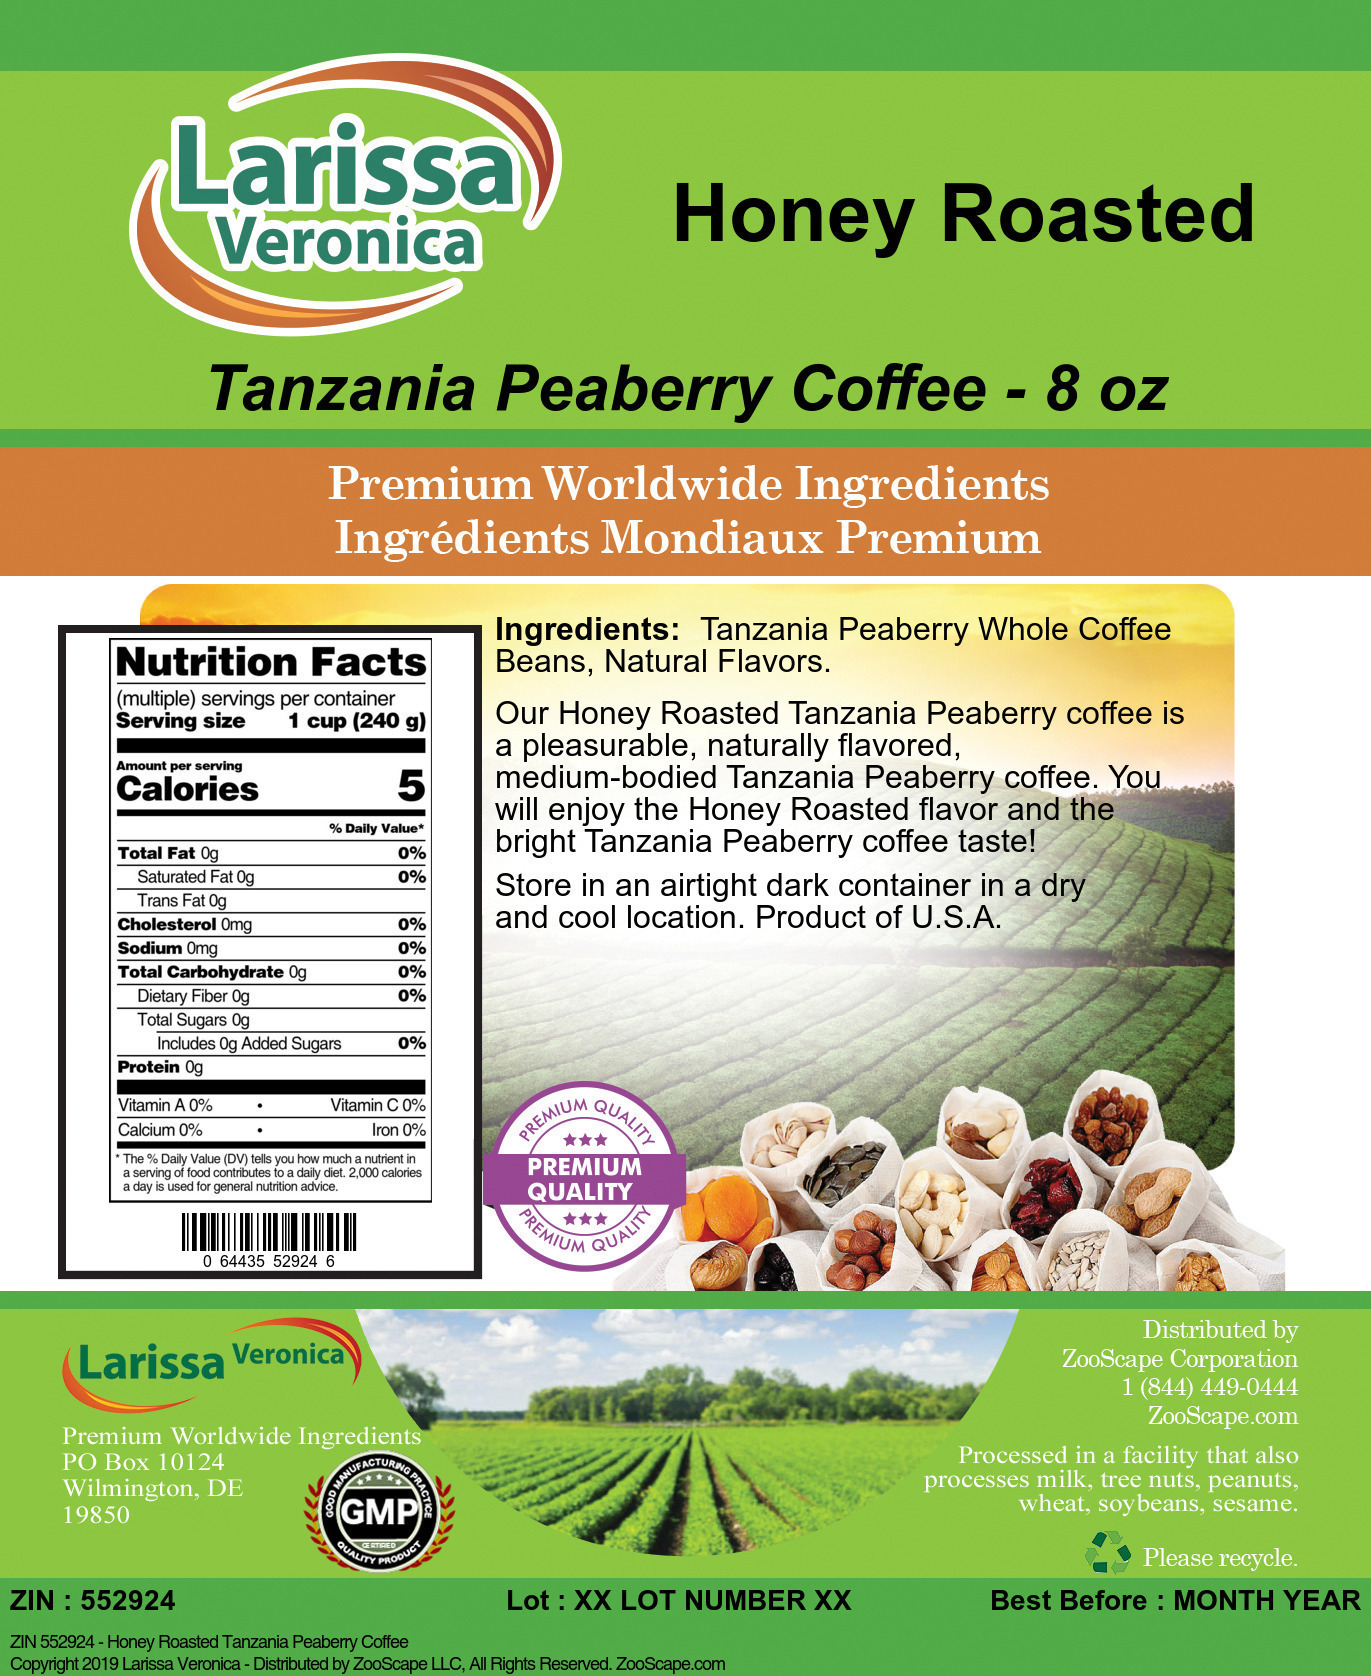 Honey Roasted Tanzania Peaberry Coffee - Label